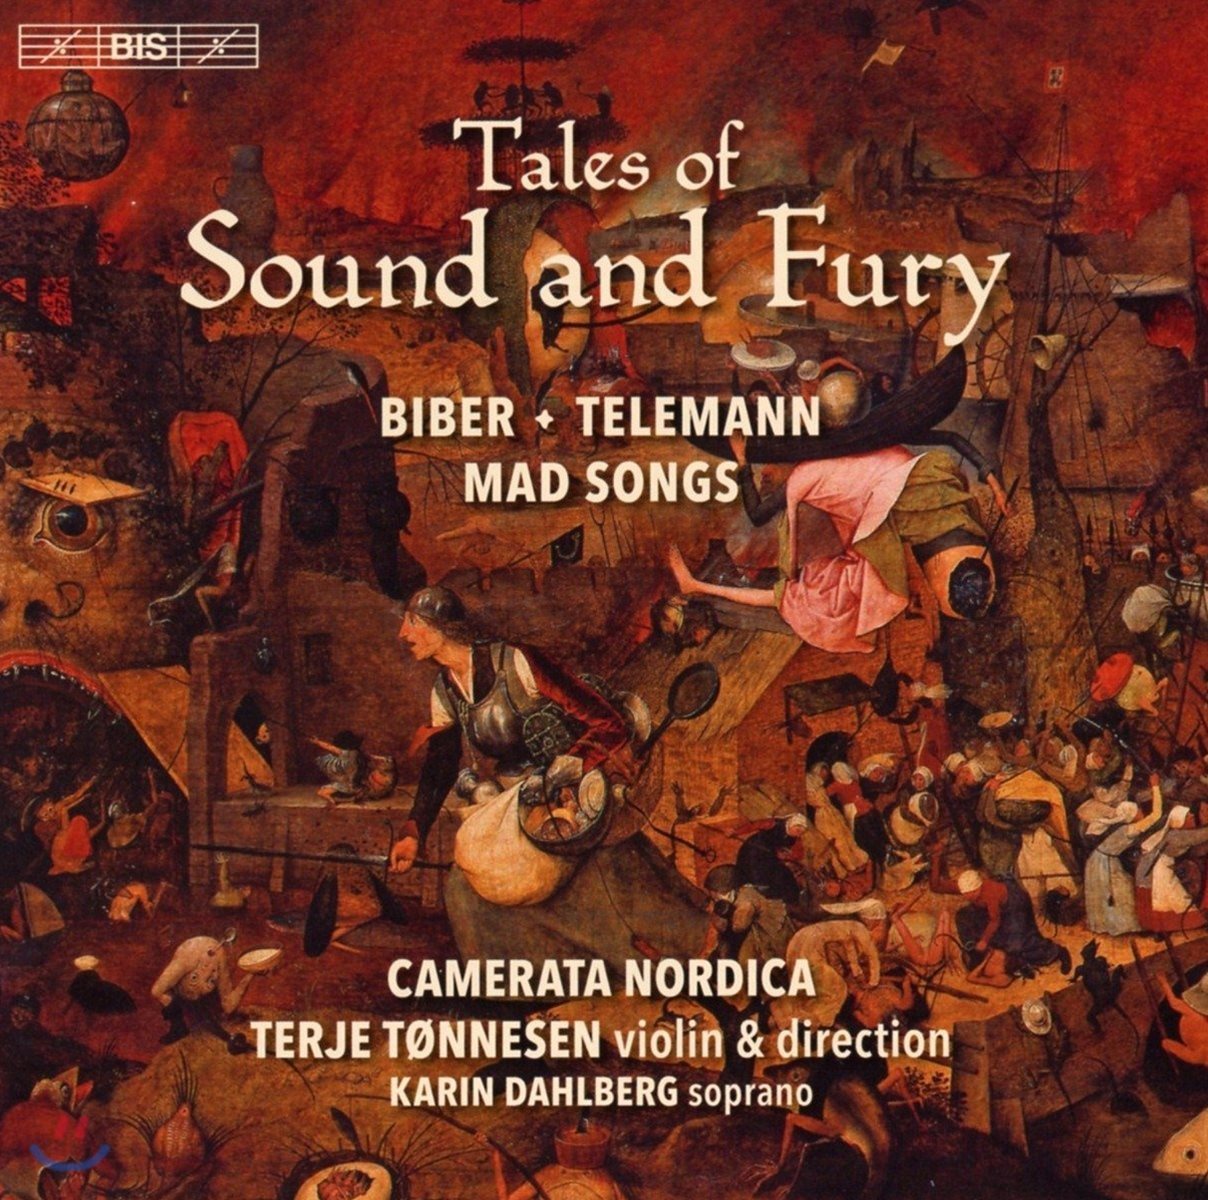 Camerata Nordica 소리와 분노의 이야기 - 비버 / 텔레만 (Tales of Sound and Fury - Biber / Telemann: Mad Songs) 카메라타 노르디카, 테리에 톤네센